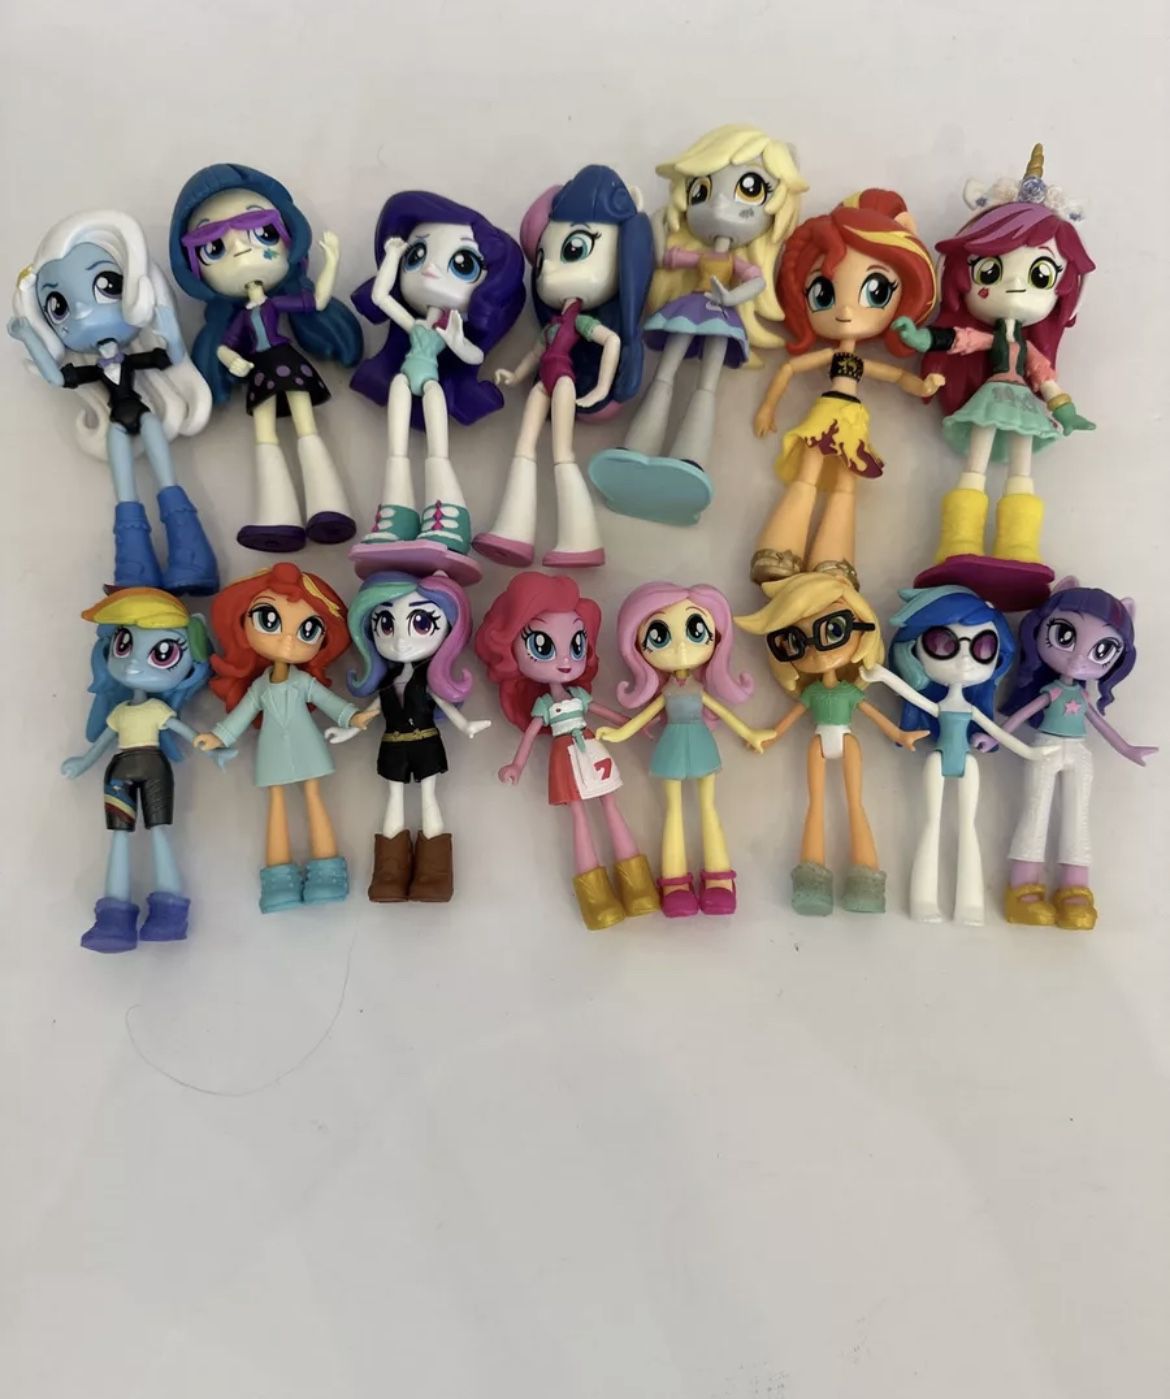 My Little Pony Equestria Girls Mini Dolls Lot of 15 Doll Figures 2015-2016